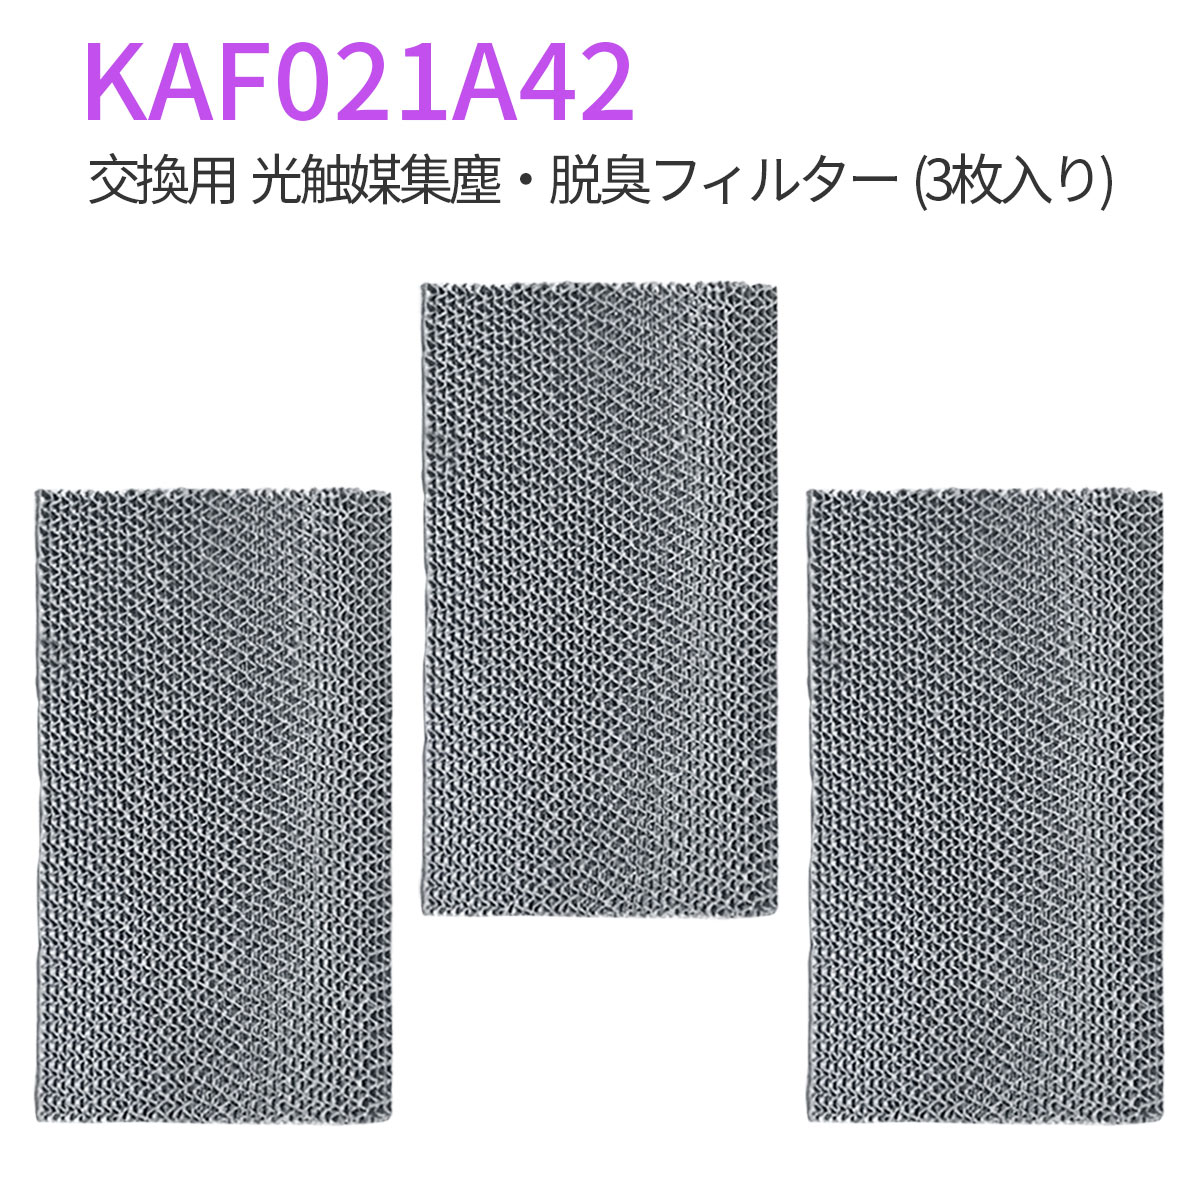 KAF021A42 エアコン フィルター 光触媒集塵・脱臭フィルタ (枠なし) ダイキン kaf021a42 エアコン用交換フィルター 99a0484「互換品 3枚セット」